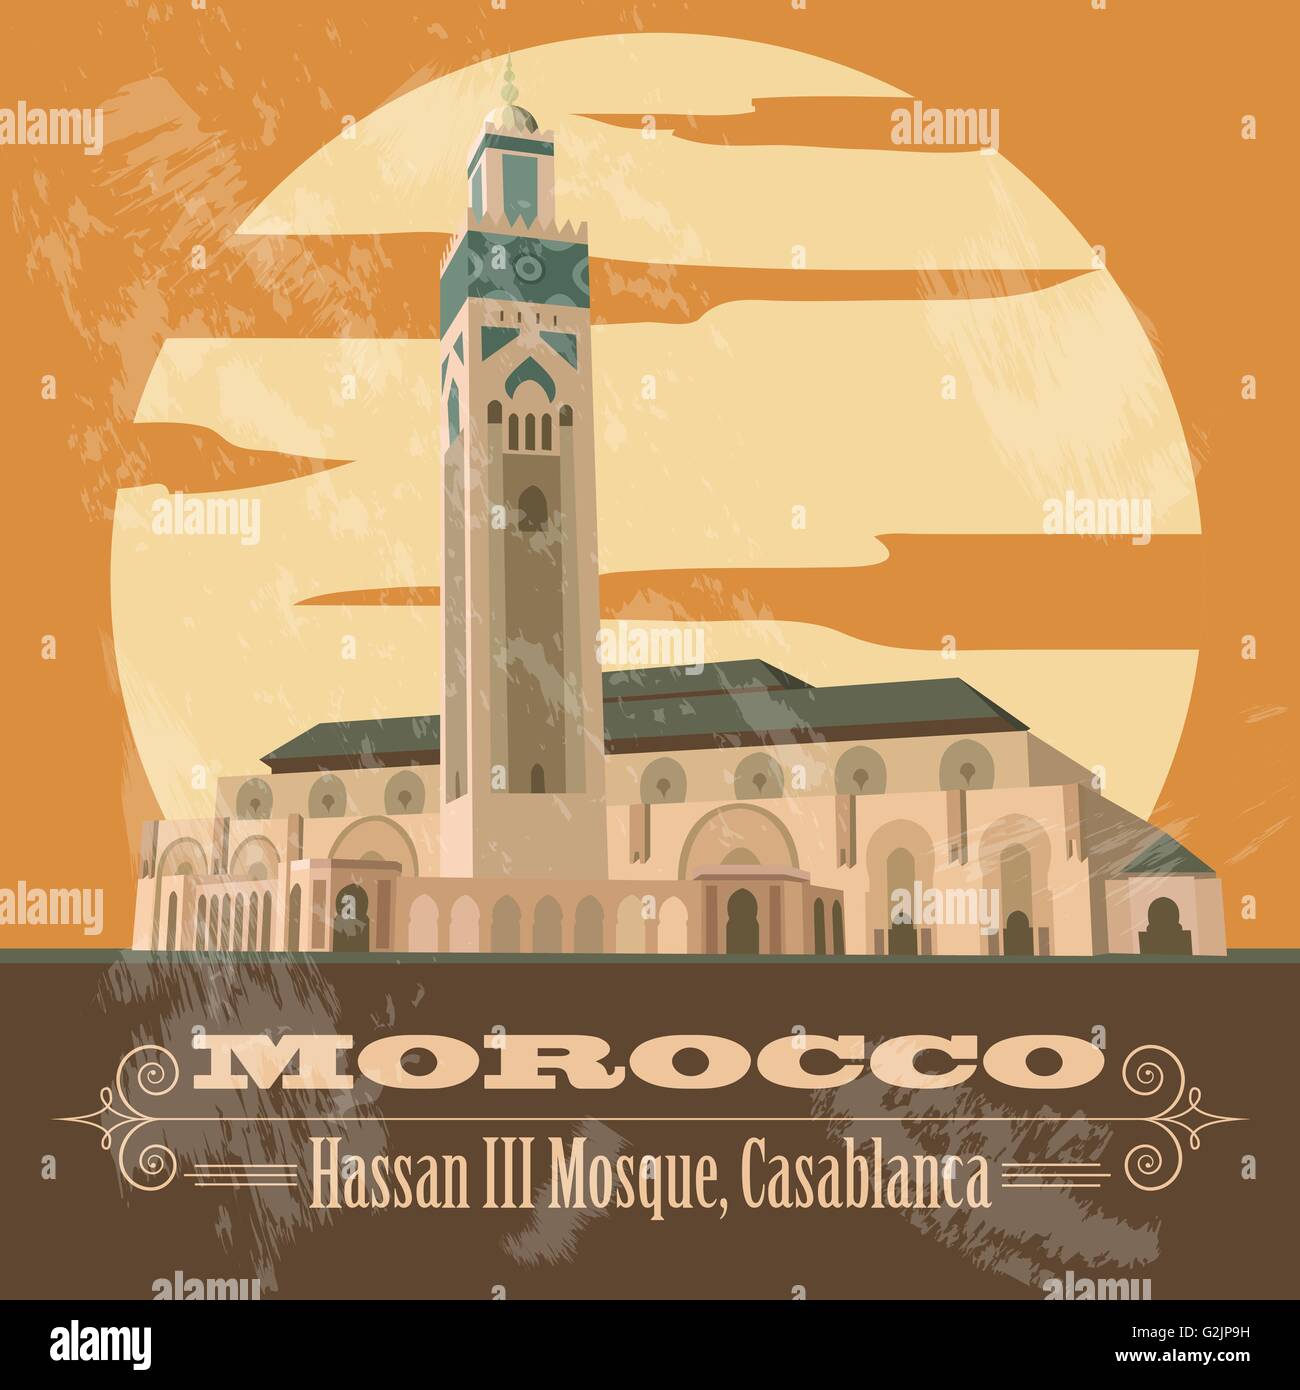 Kingdom of Morocco landmarks. Hassan III Mosque in Casablanca. Retro styled image. Vector illustration Stock Vector